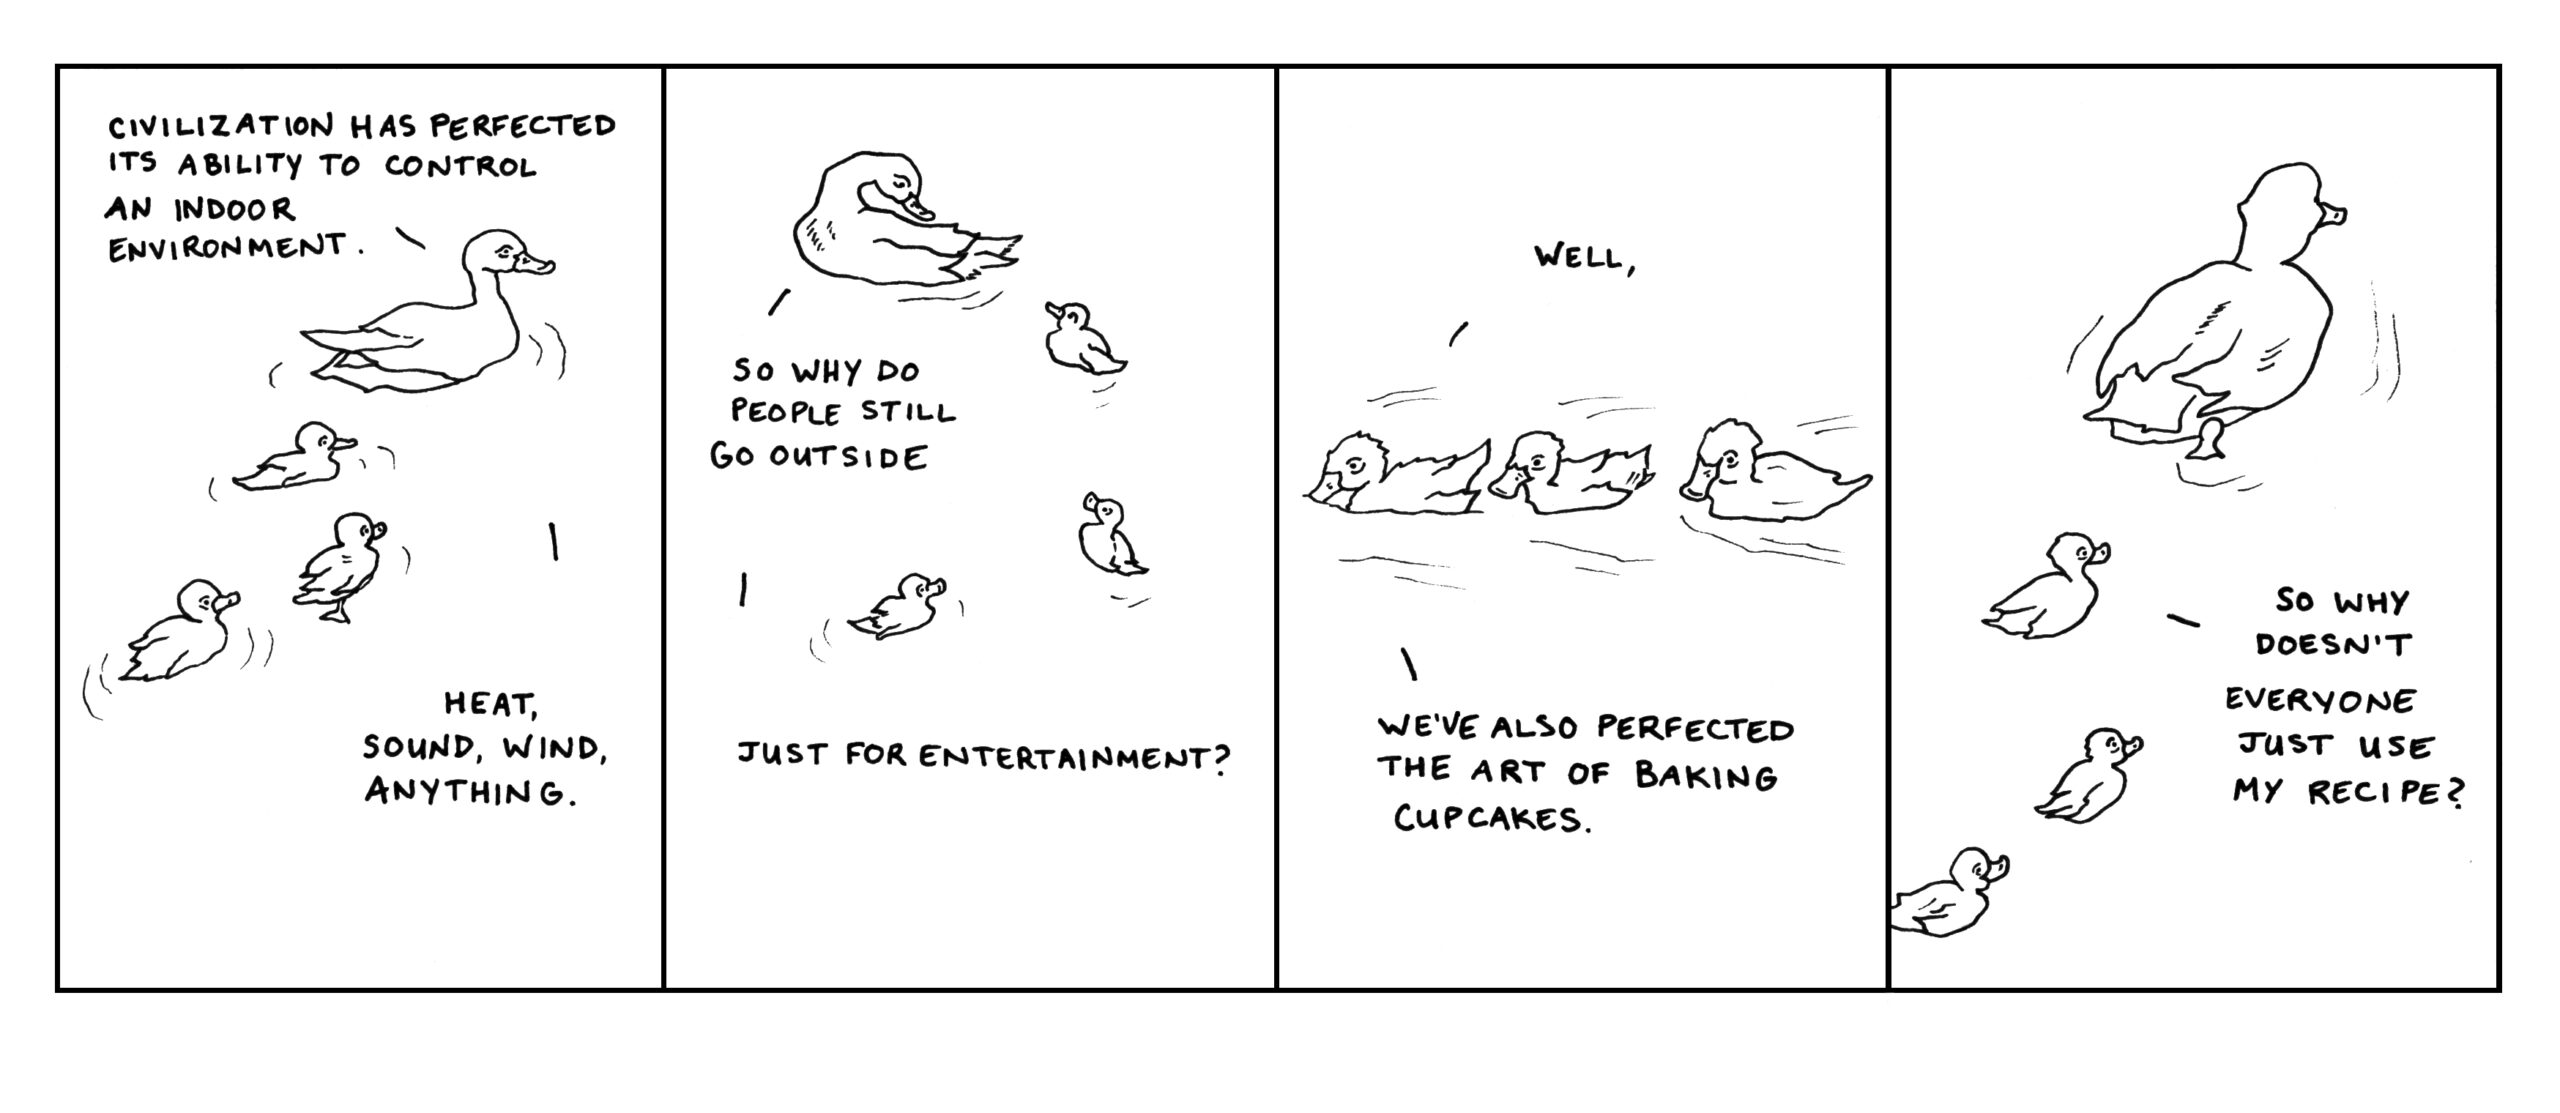 Ducks redux